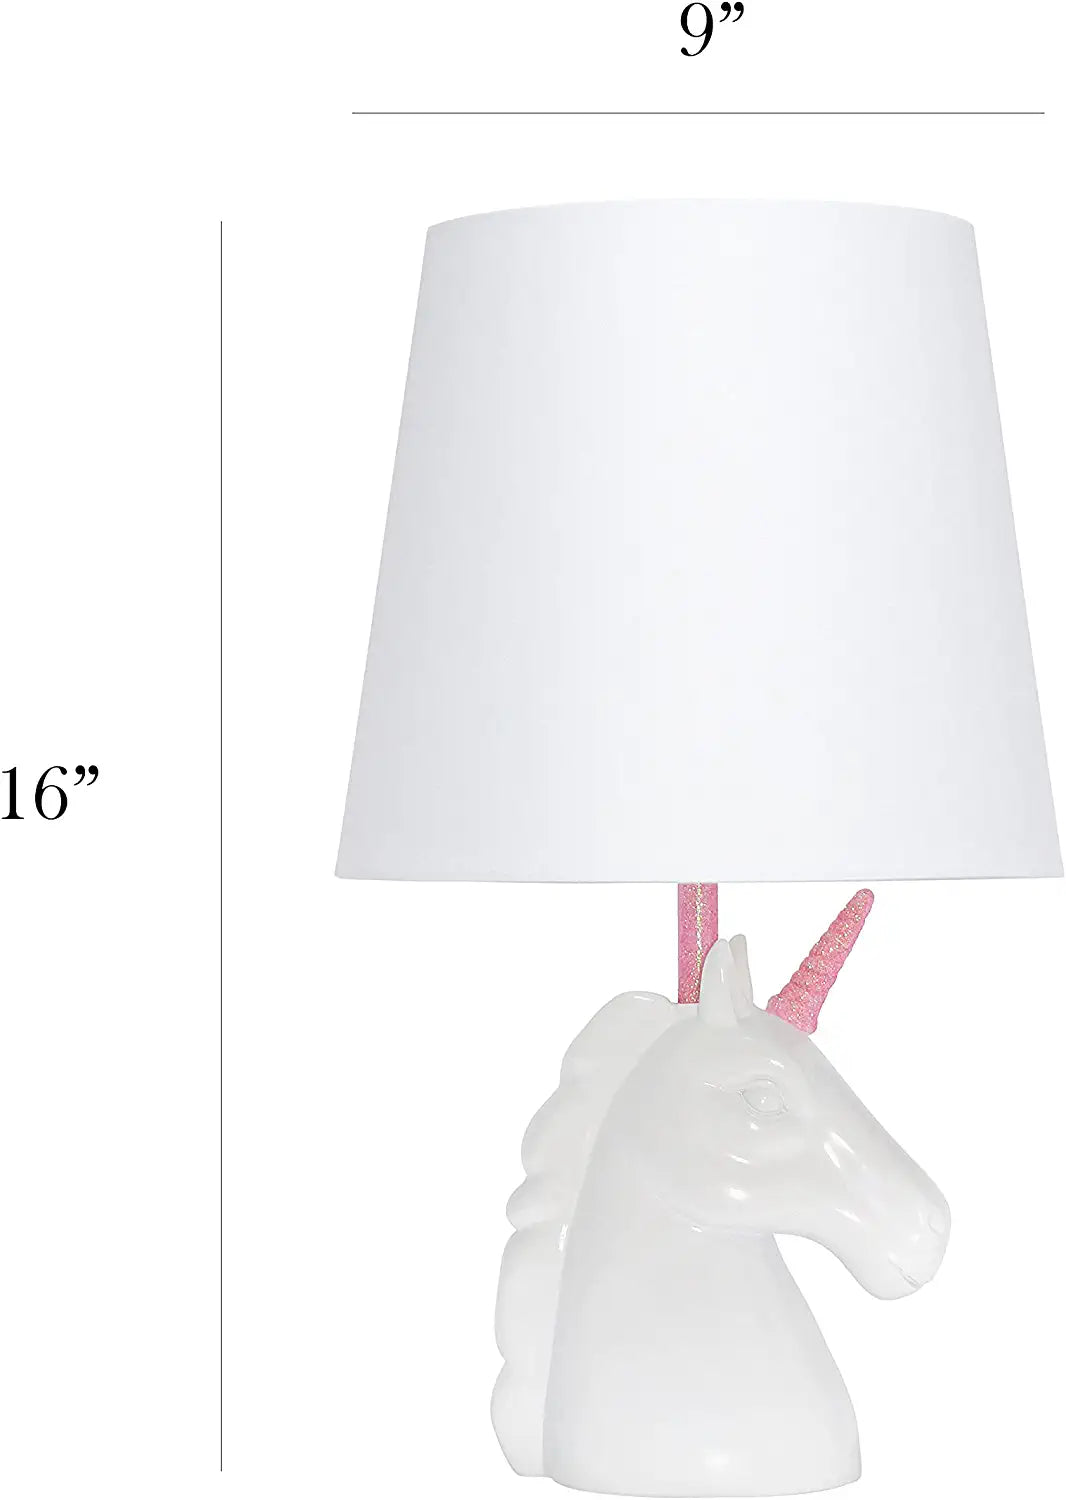 Simple Designs LT1078-SLV Sparkling Glitter Unicorn Table Lamp, Silver